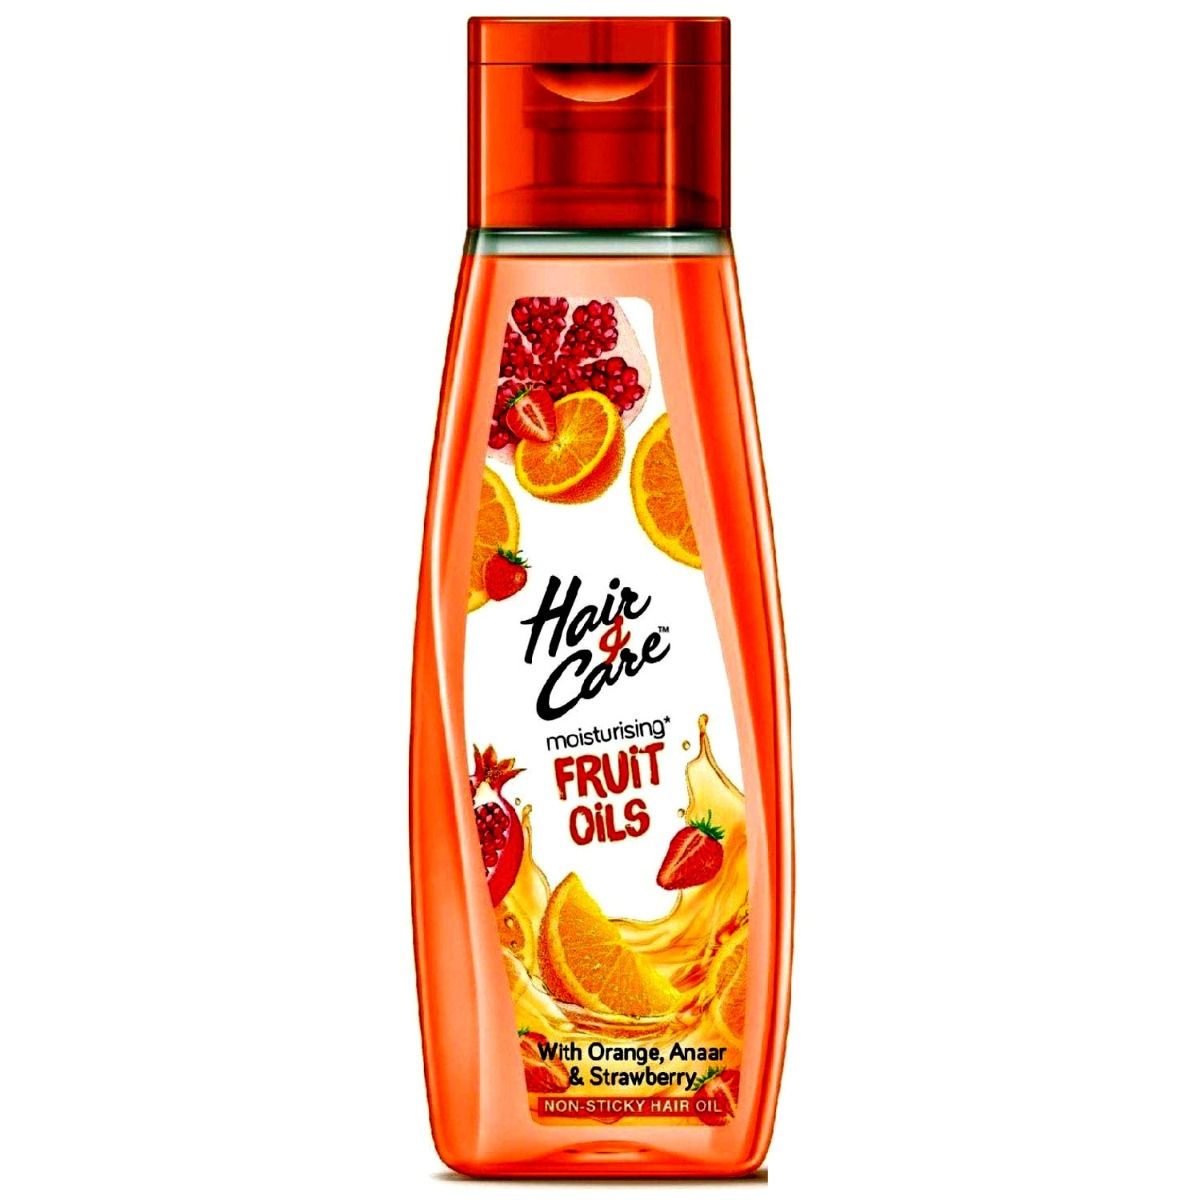 Hair & Care Moisturising Fruit Oils Non Sticky Hair Oil, 100 ml Price,  Uses, Side Effects, Composition - Apollo Pharmacy